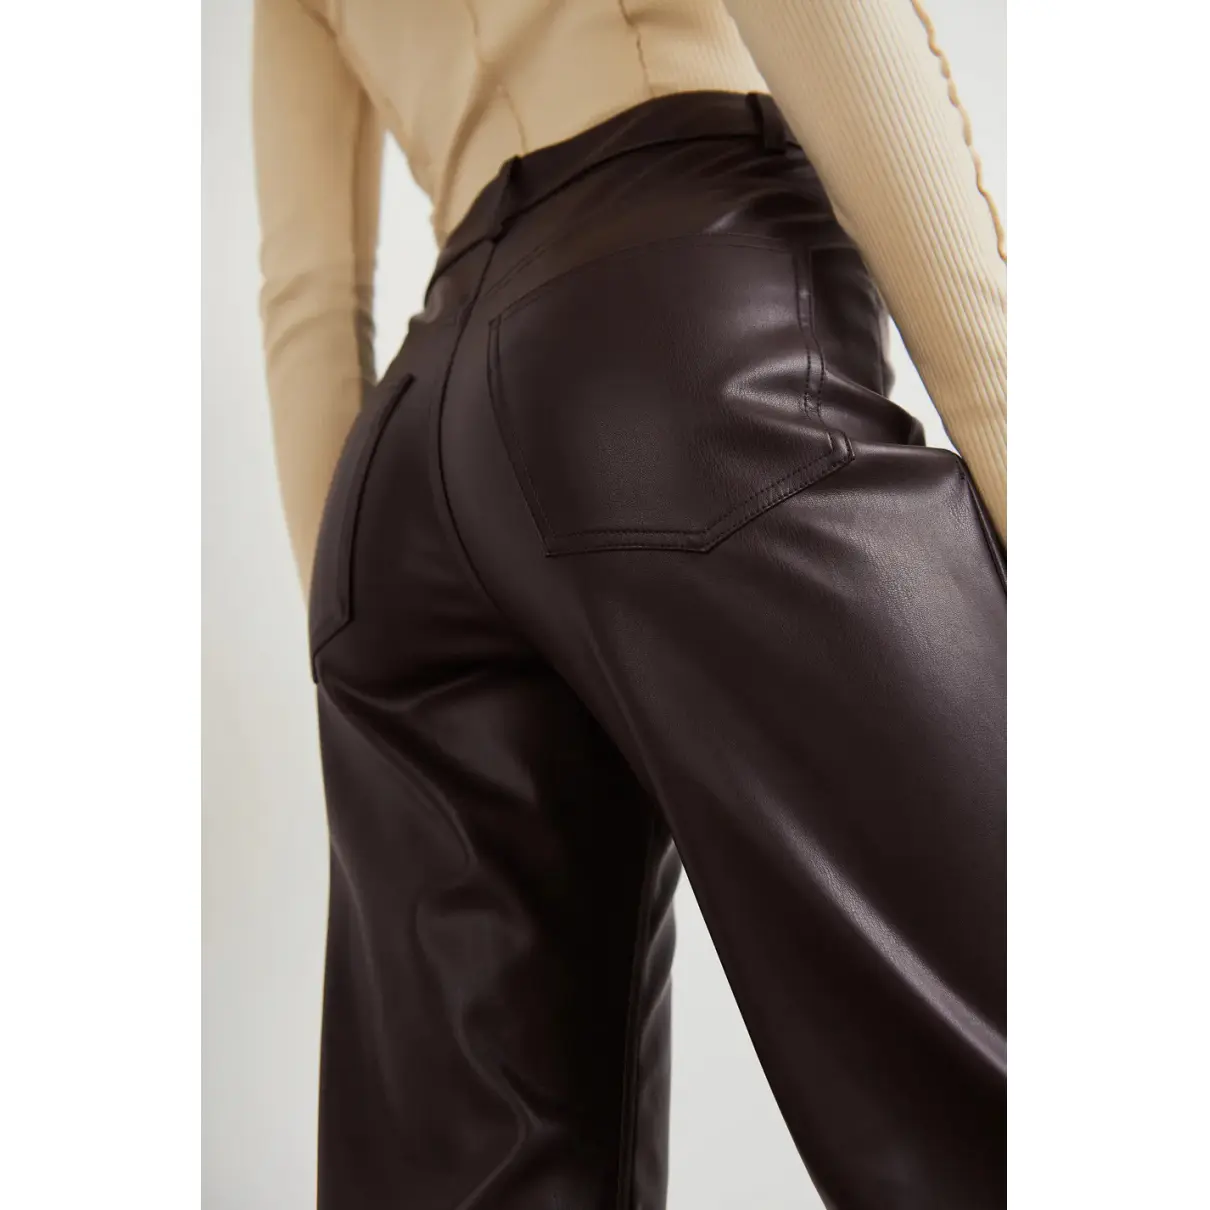 Luxury GINA TRICOT Trousers Women